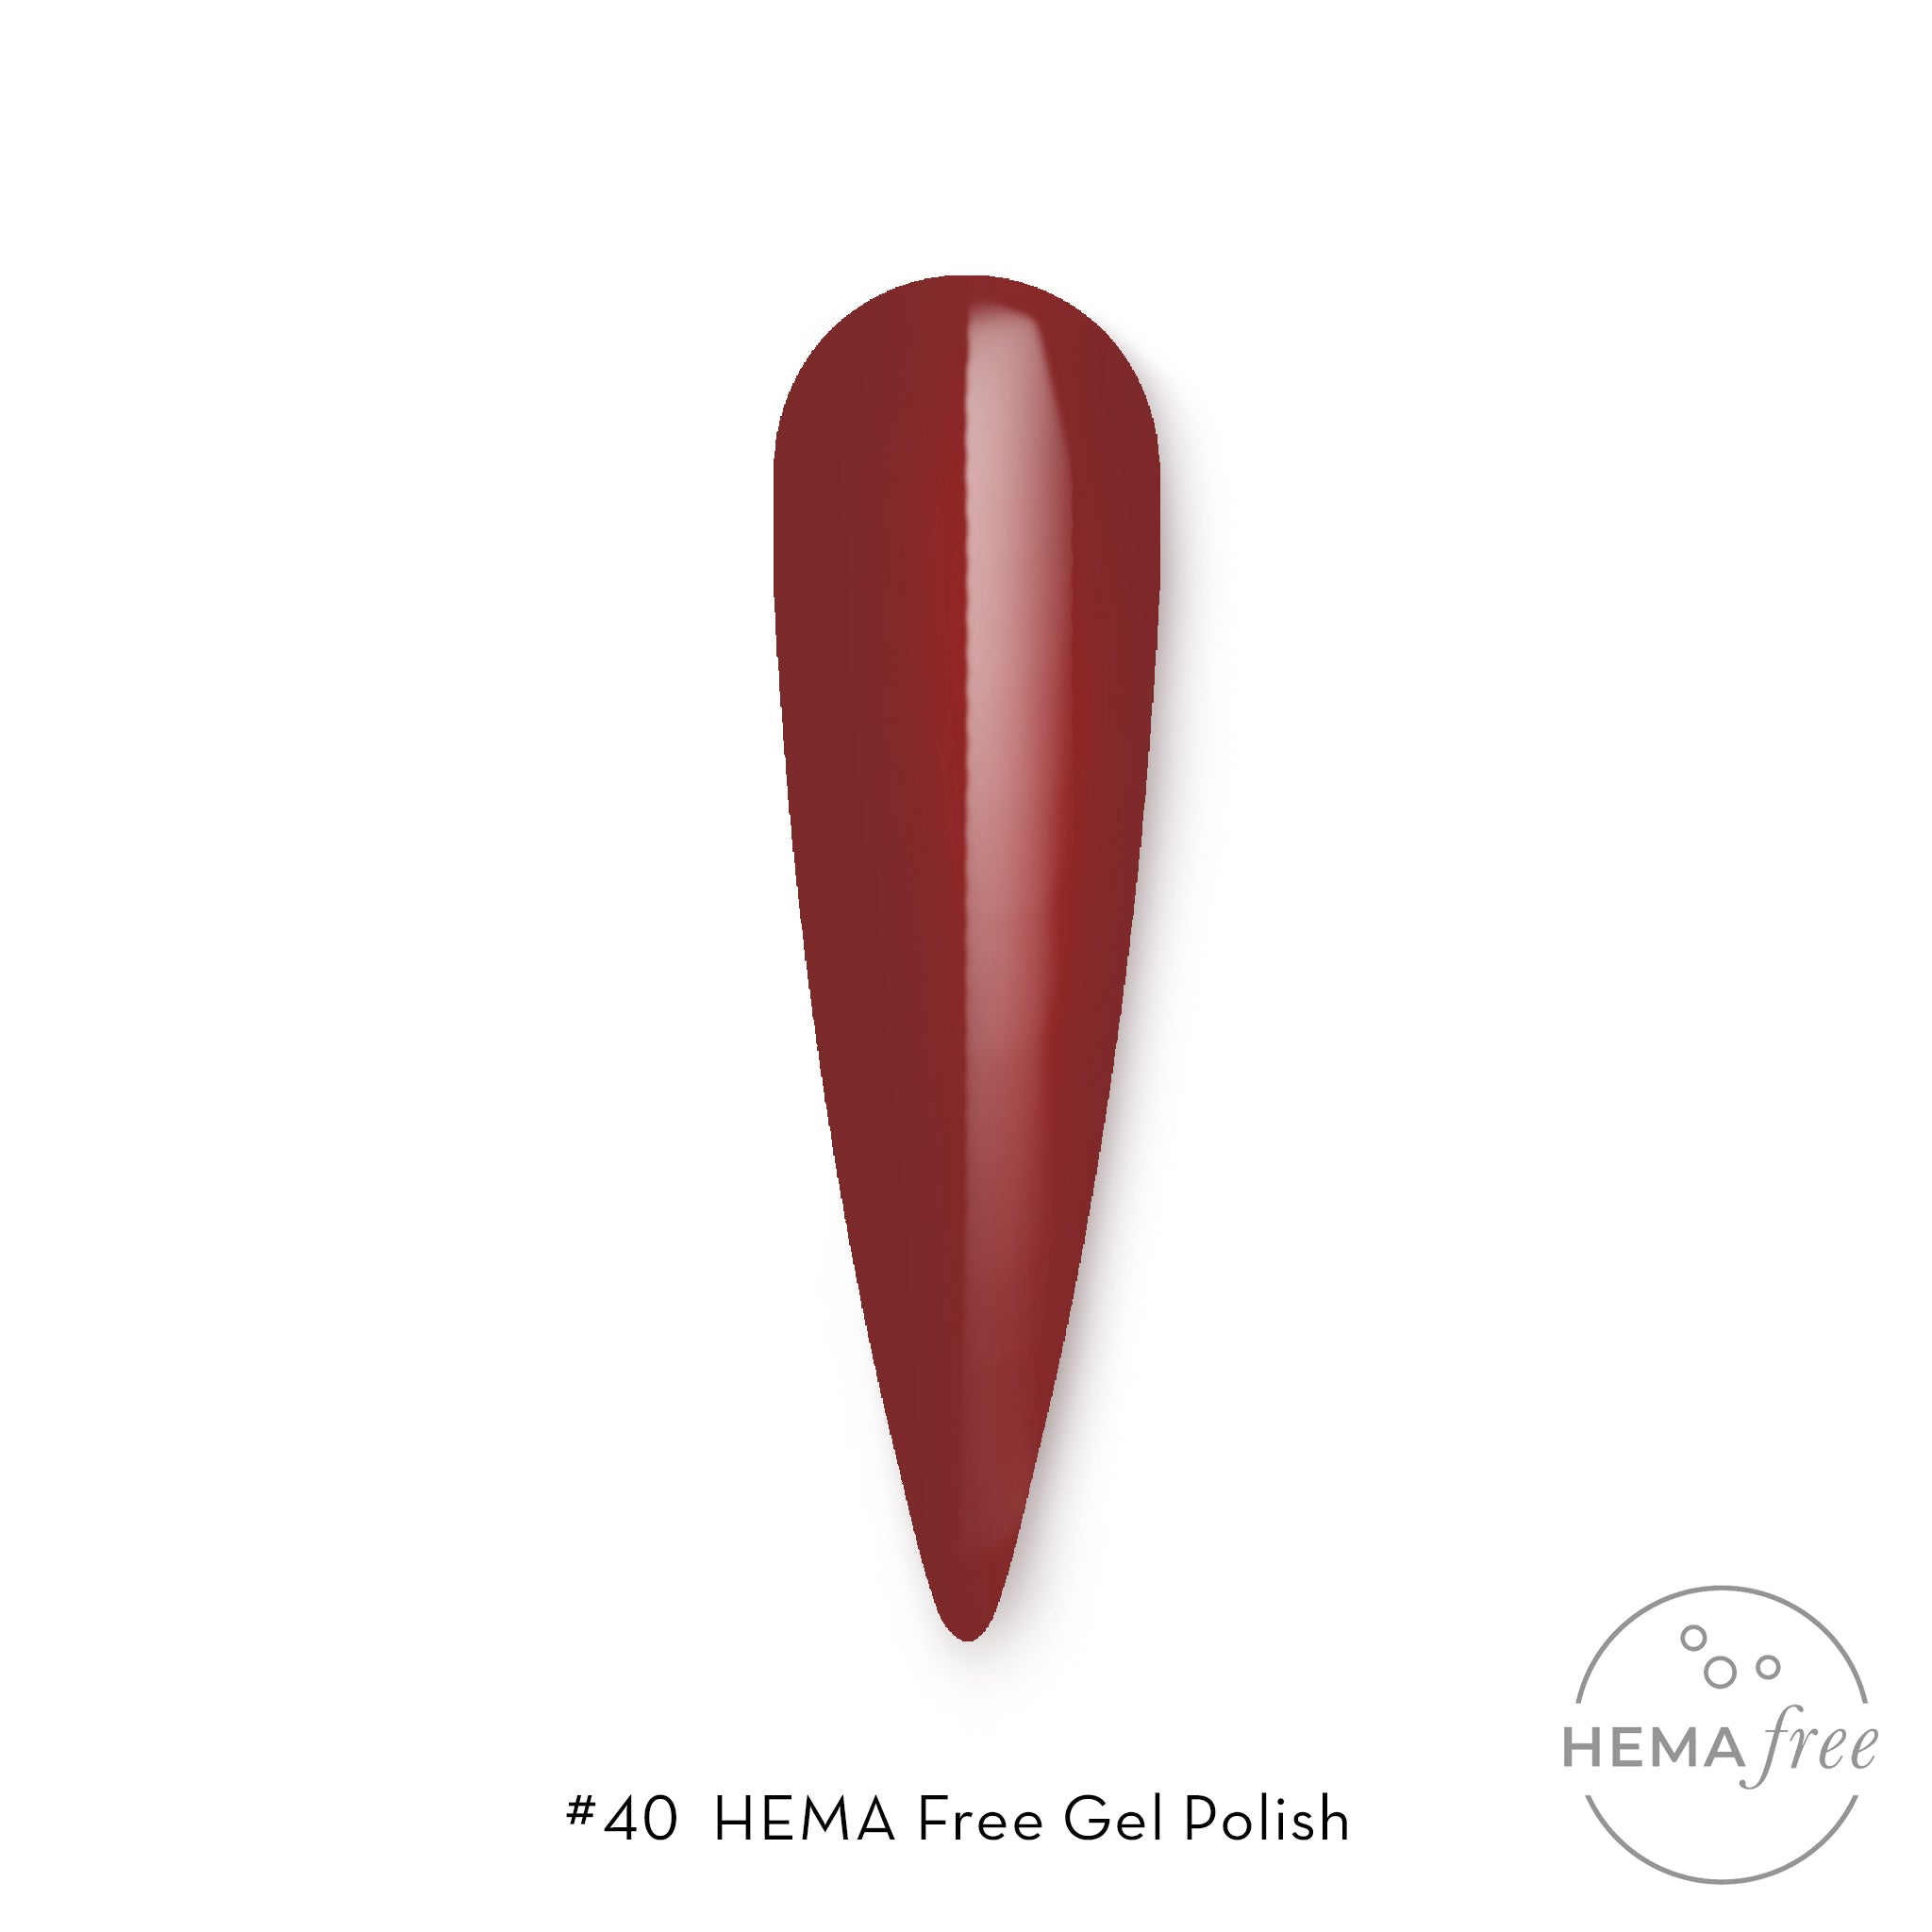 HEMA Free Gel Polish | Fortify by Fuzion | Colour 40